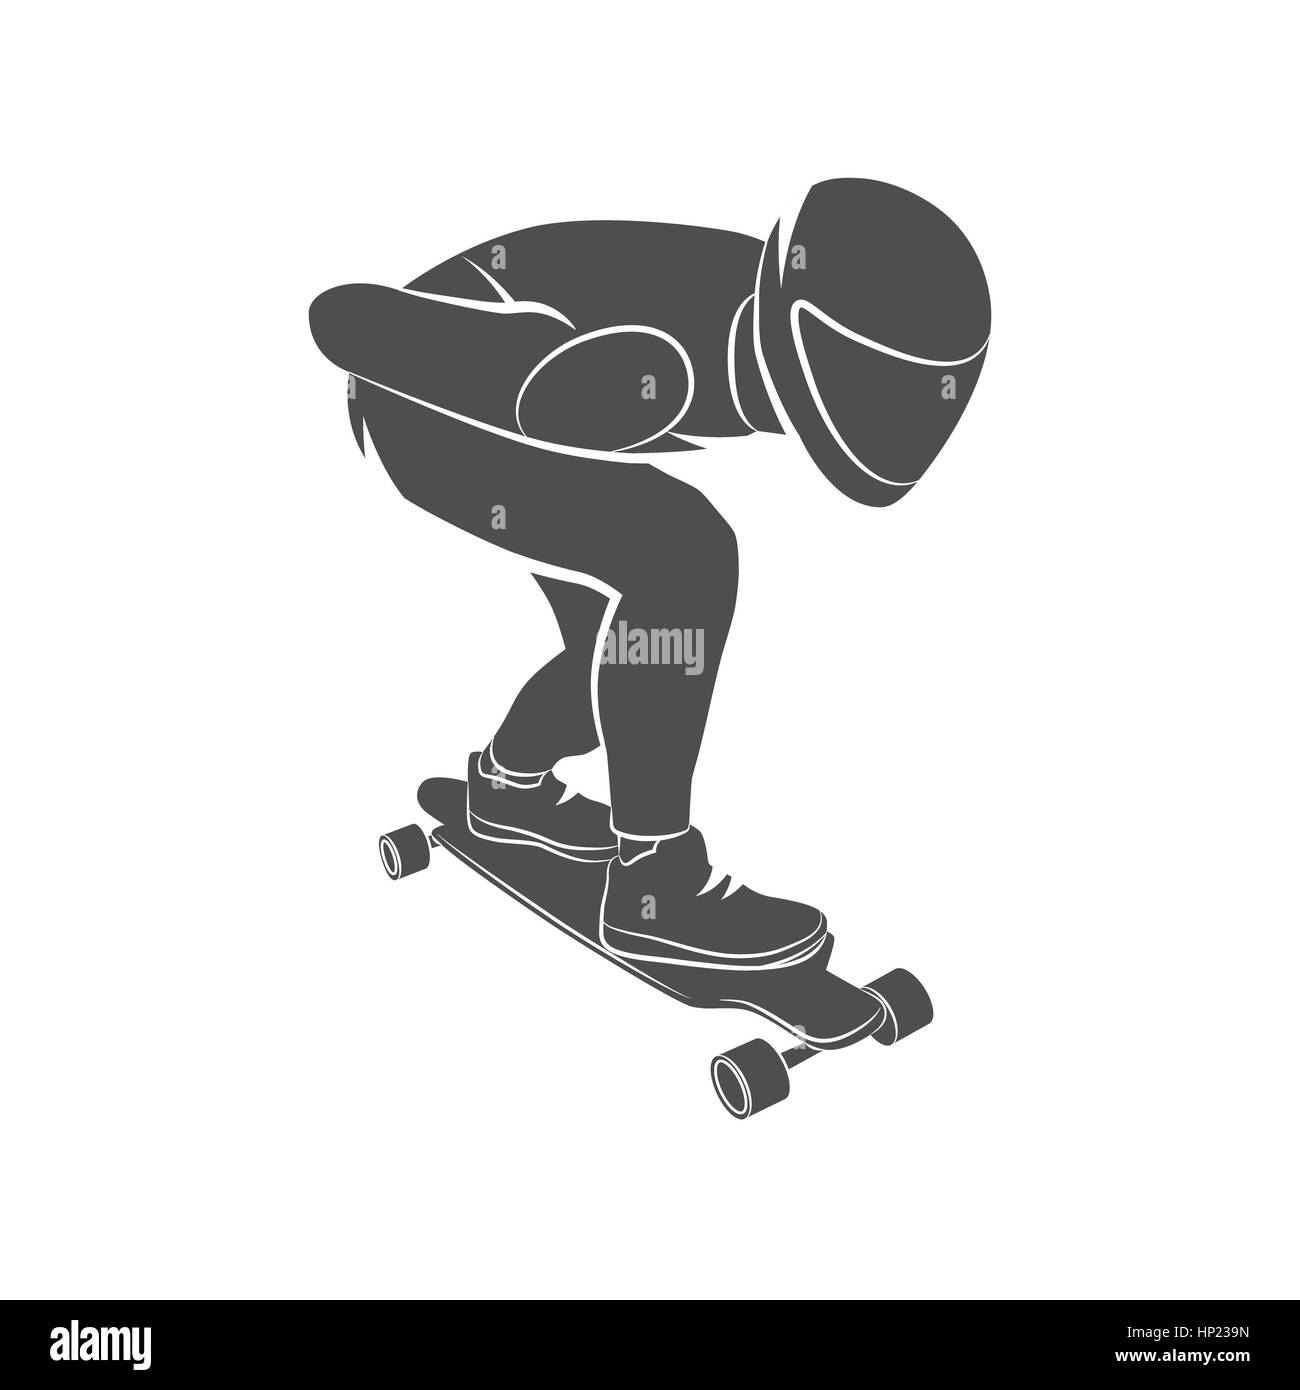 Silhouette skateboarder longboarding downhill on a white background. Photo illustration. Stock Photo